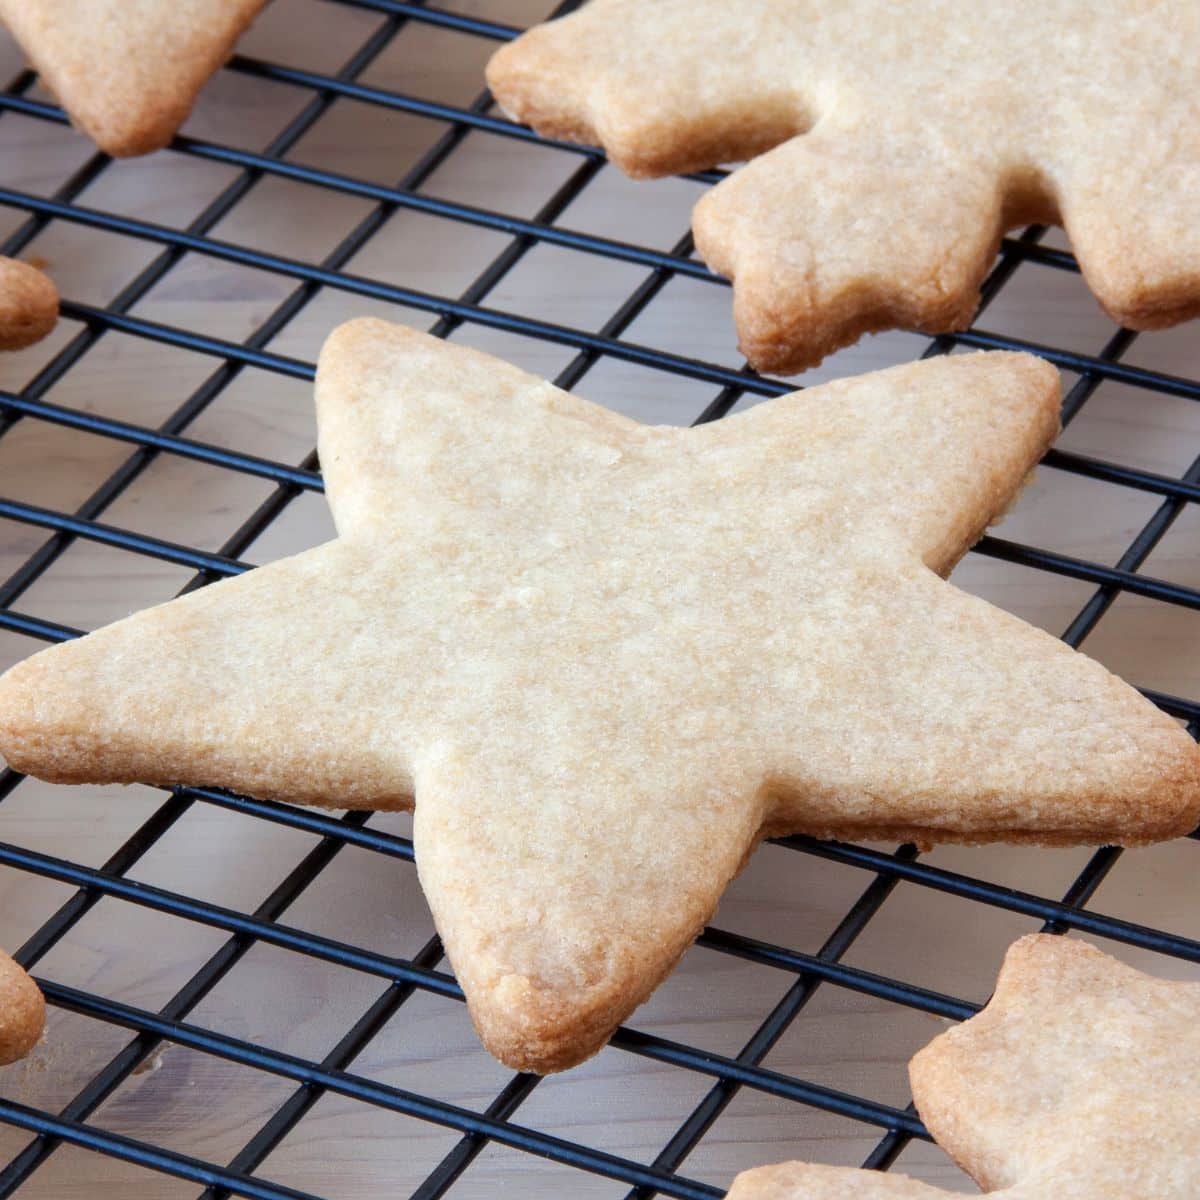 Kvadratna slika pečenih šećernih kolačića u obliku zvijezde na rešetki za hlađenje.